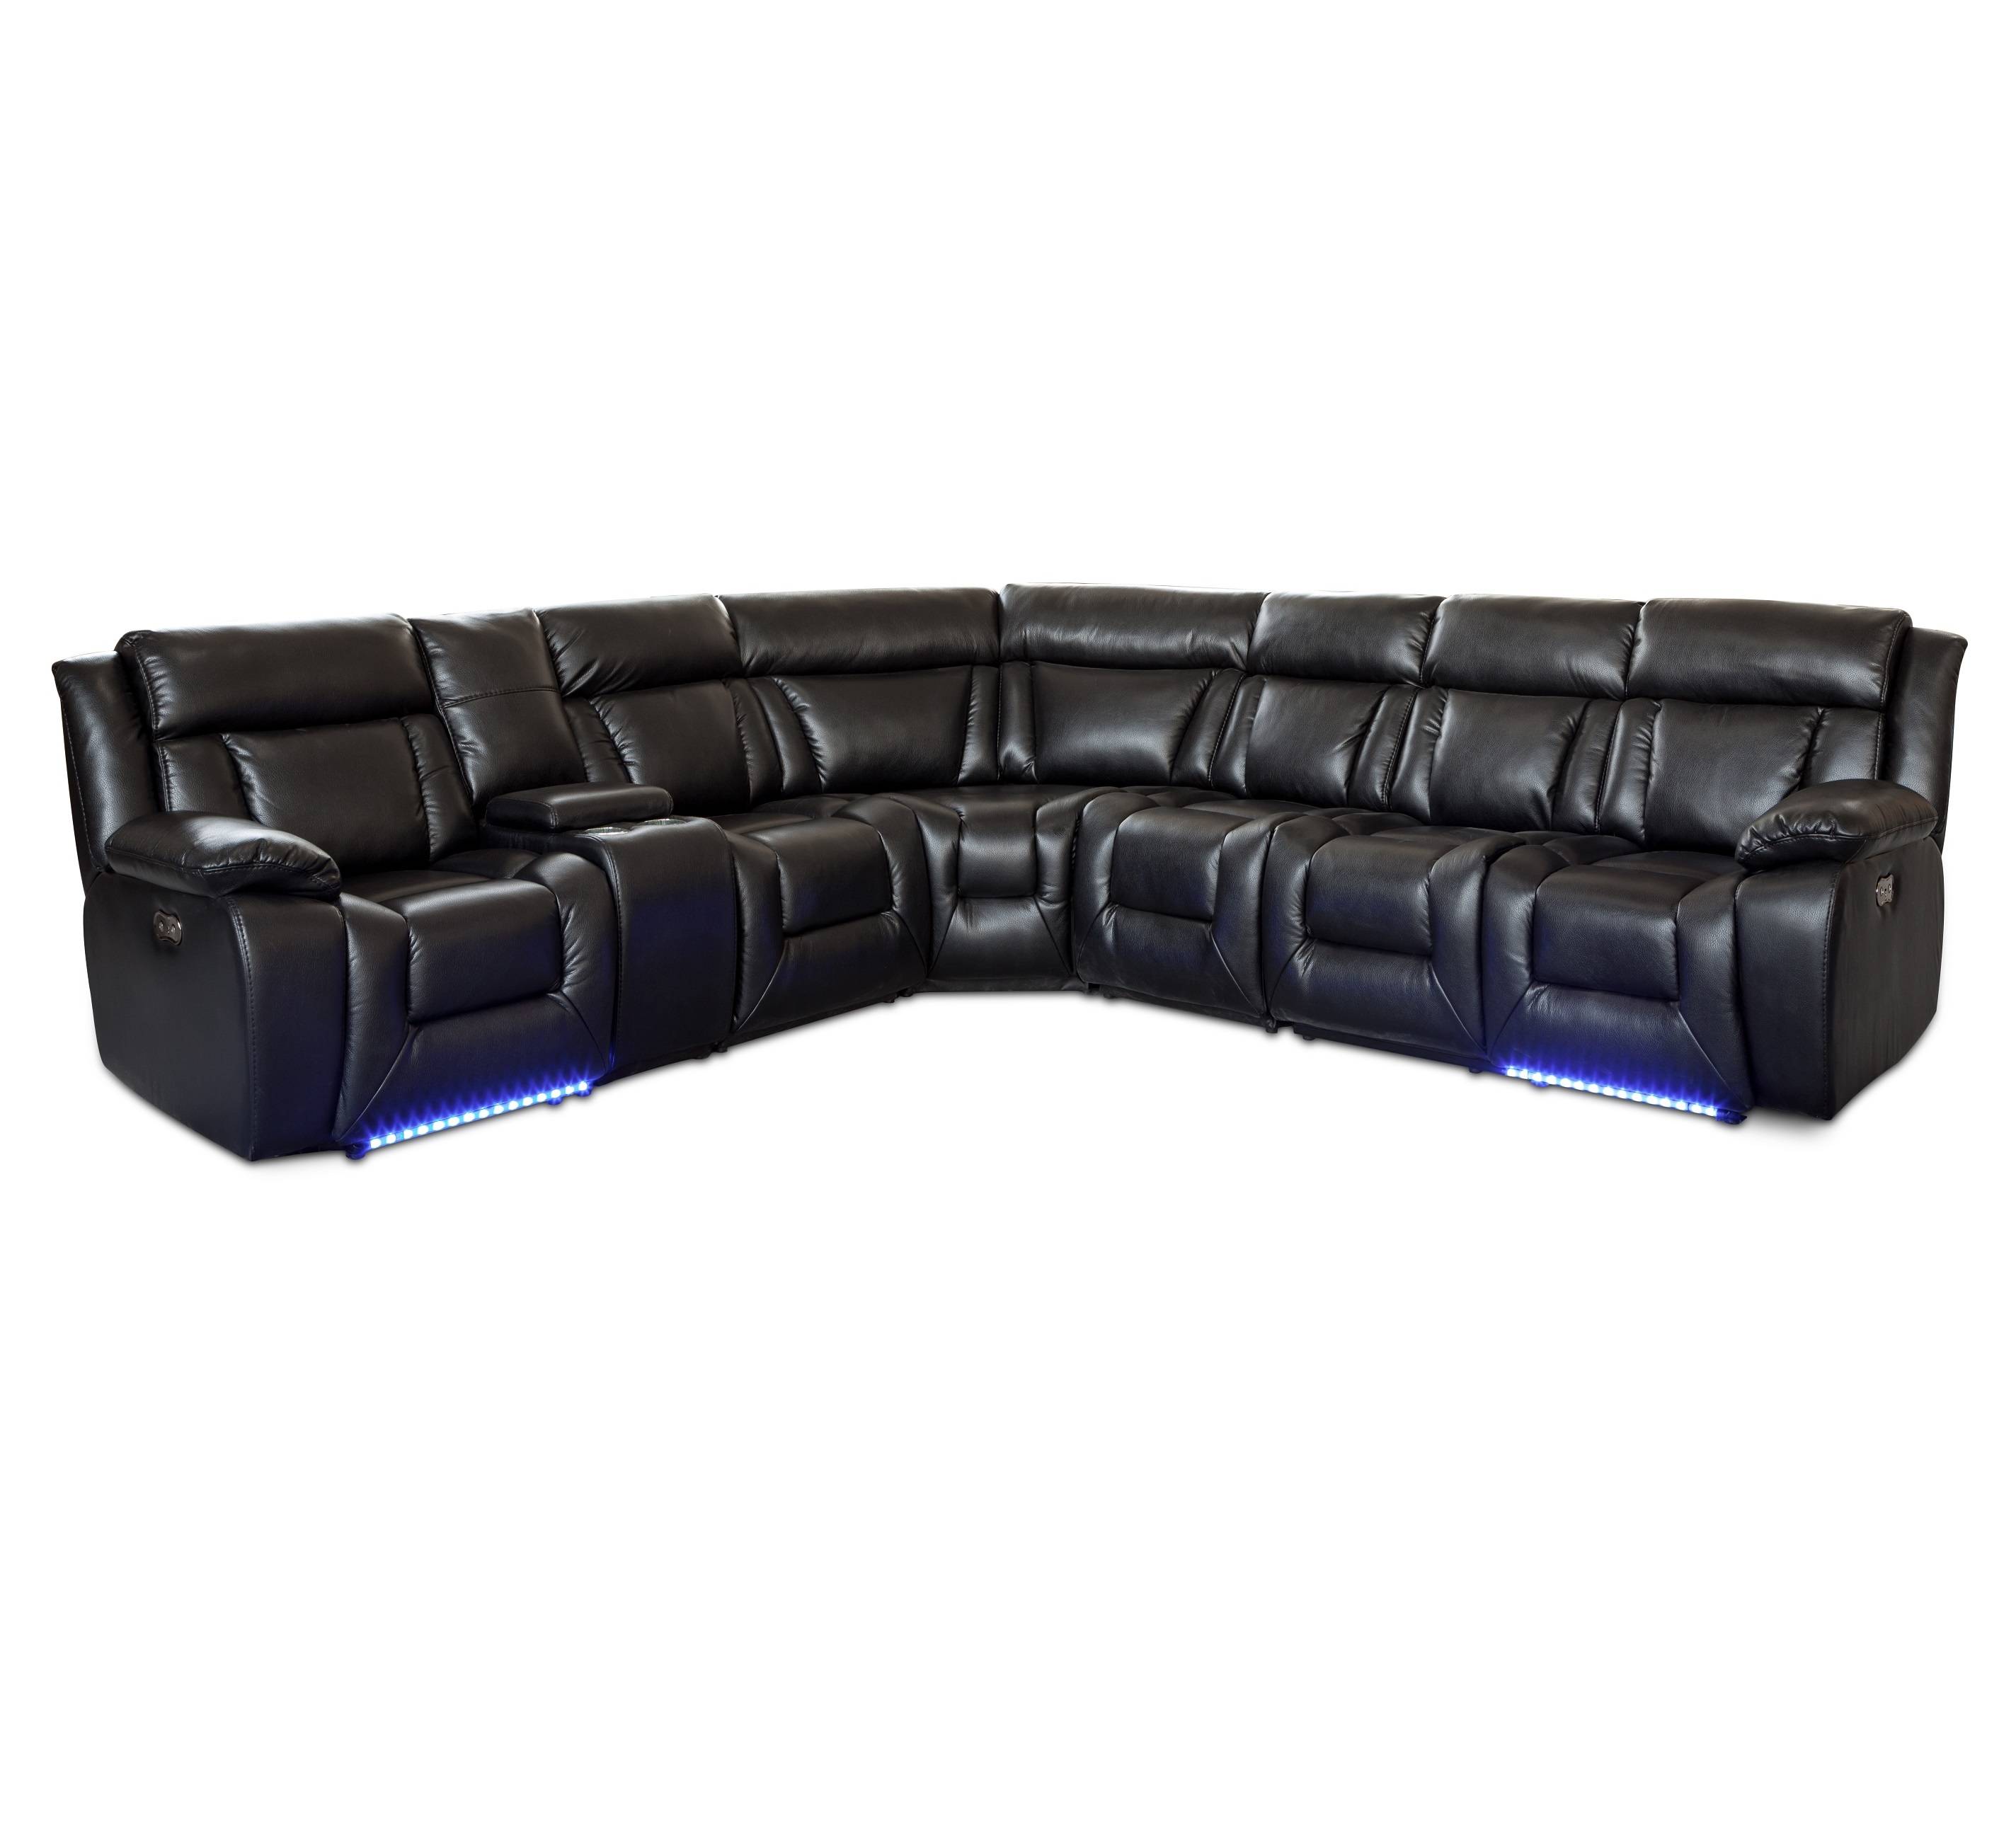 Adjustable sectional sofa living room,u shape sectional leather sofa